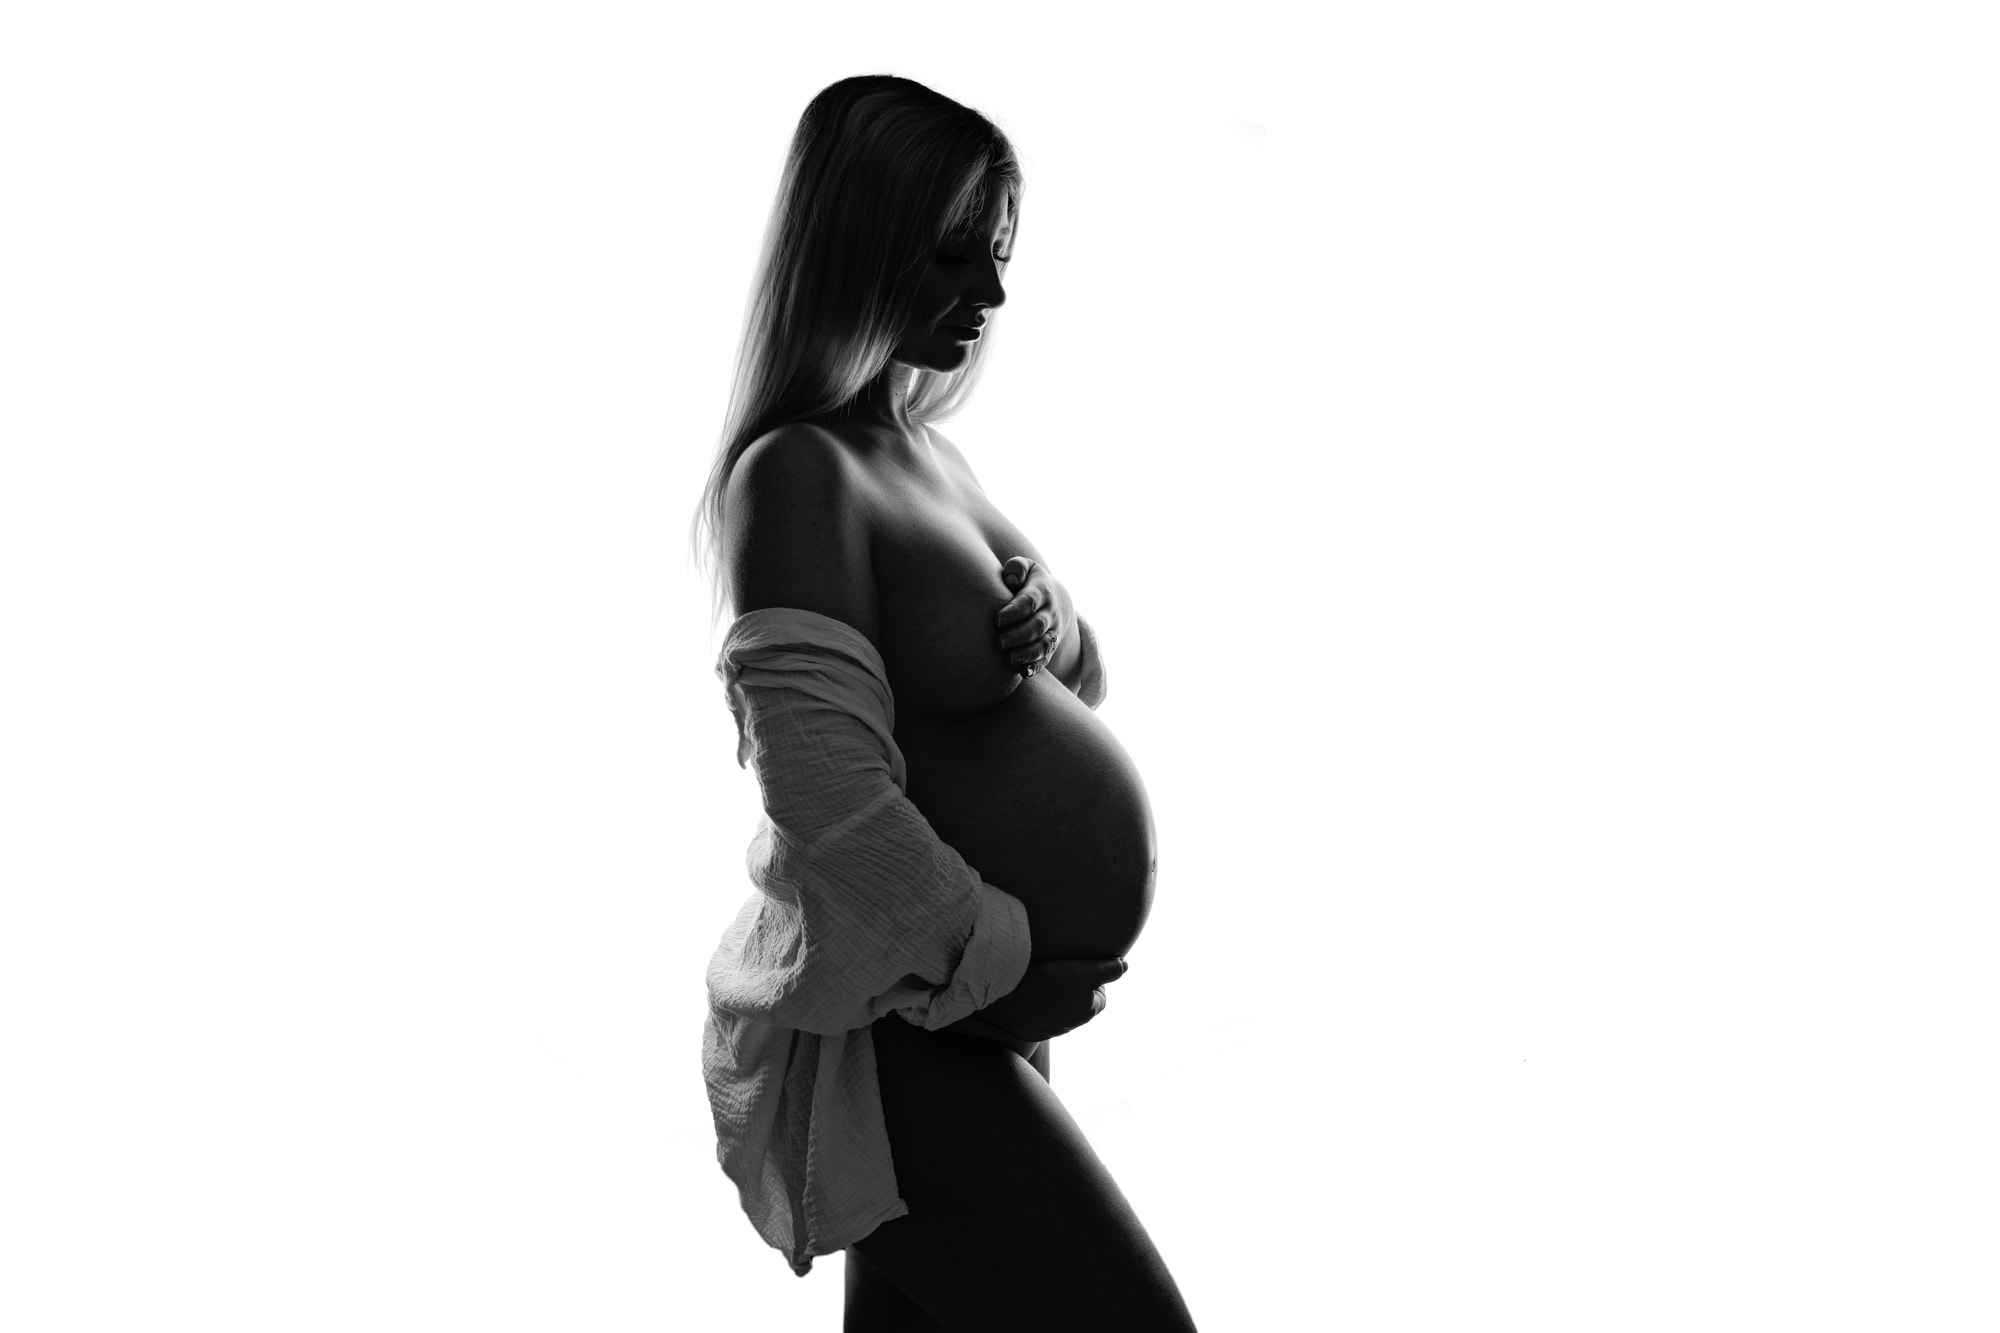 celebrate motherhood with a maternity photoshoot